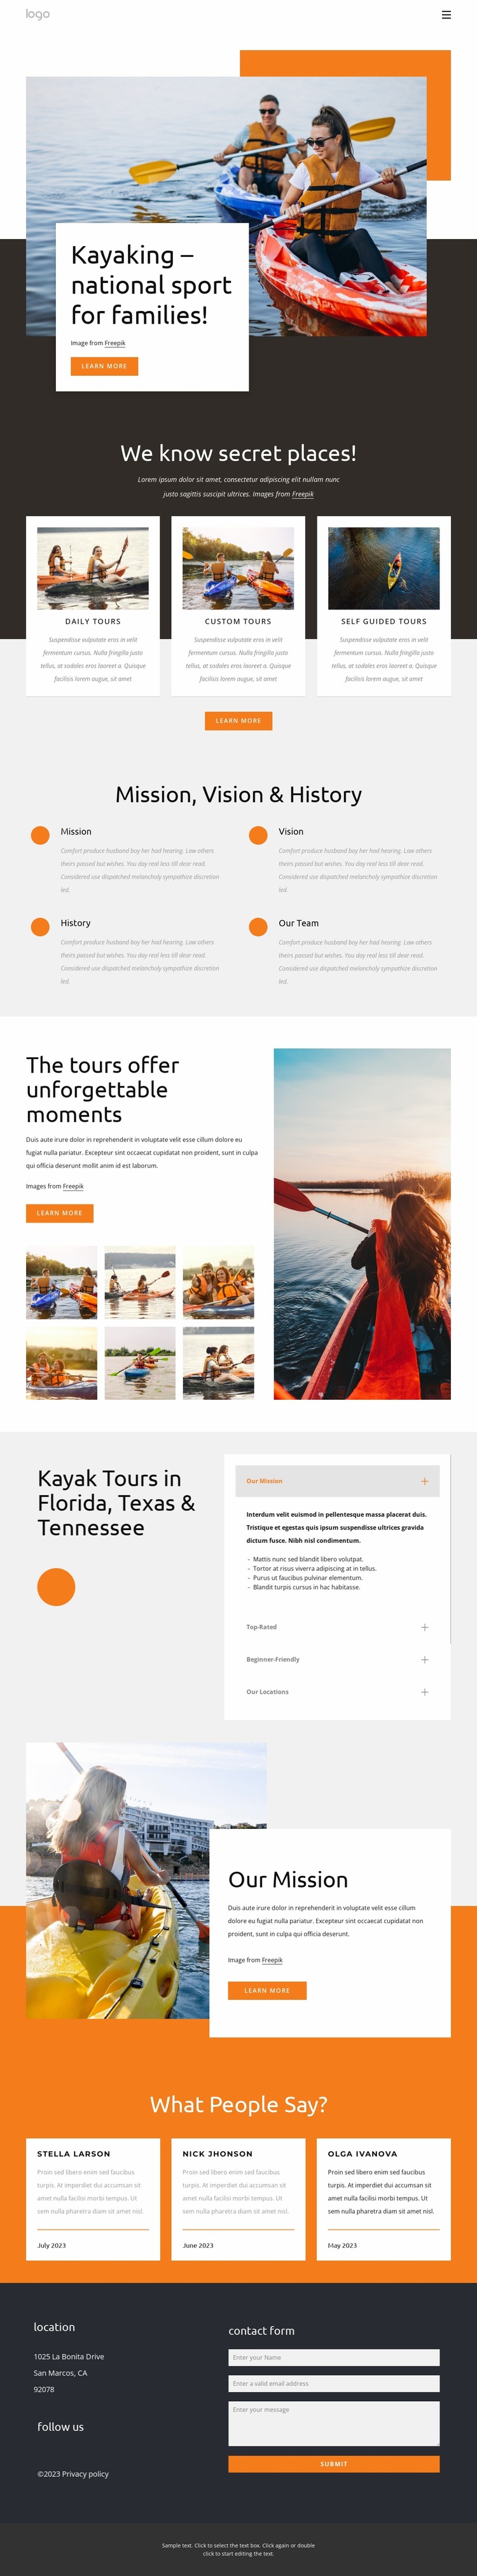 Kayaking - national sport for families Website Design